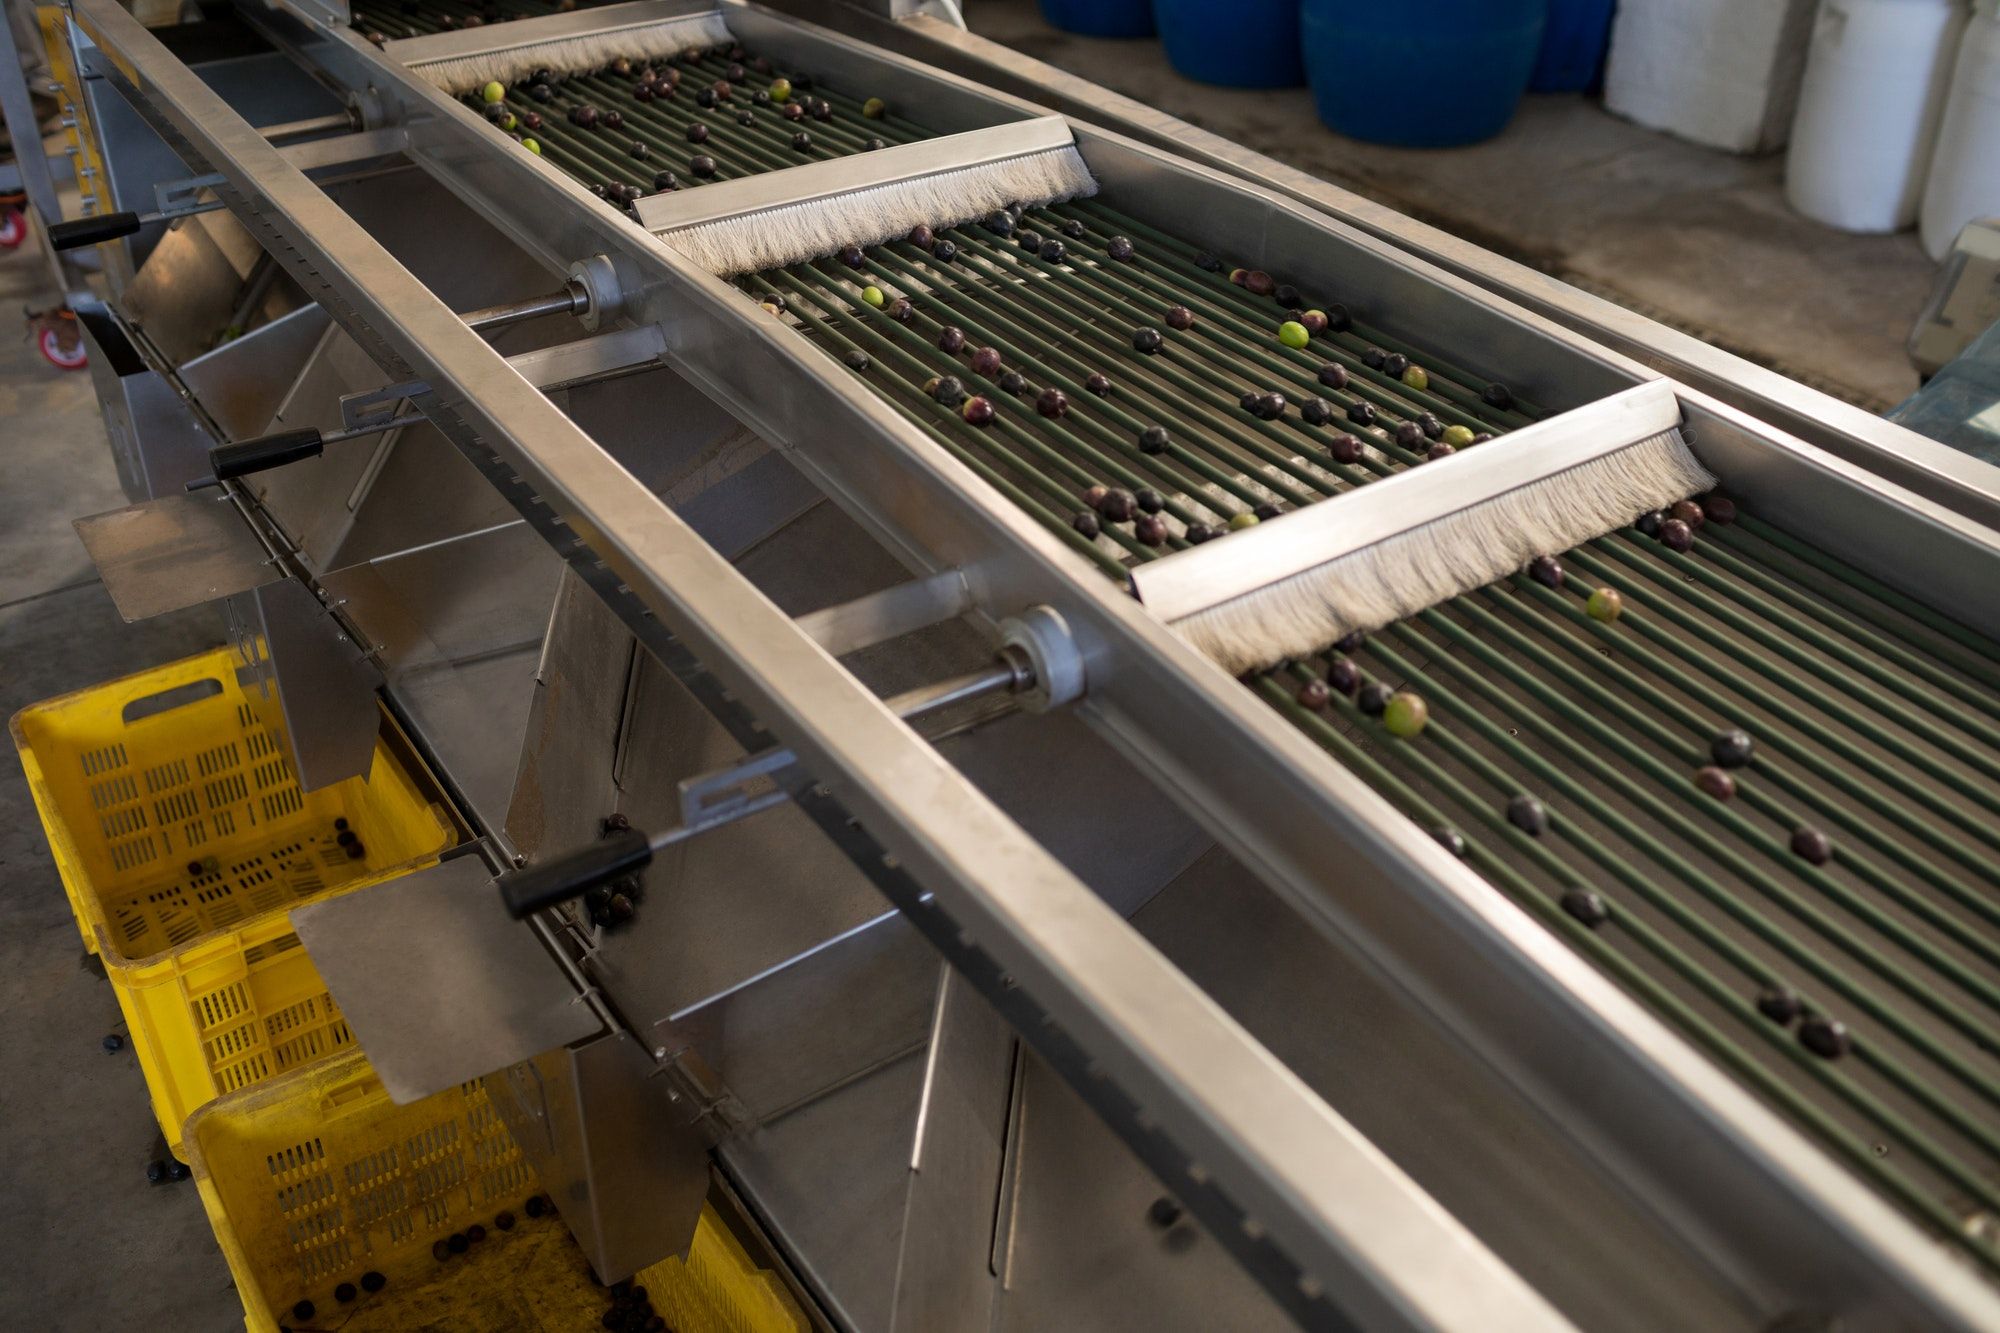 Fresh olives on conveyor belt